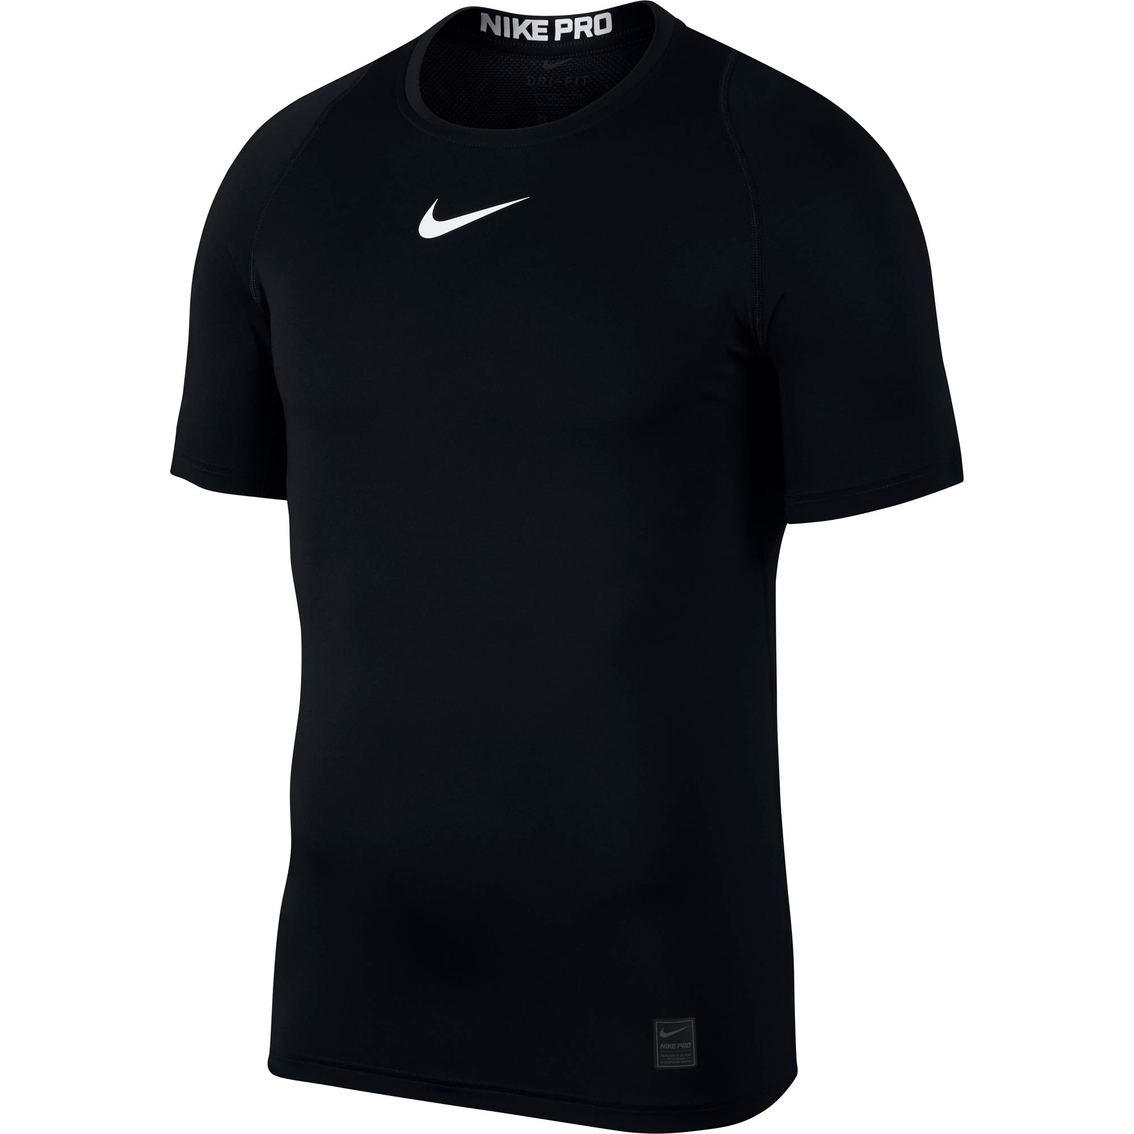 Nike Pro Cool Tee | Shirts | Clothing 